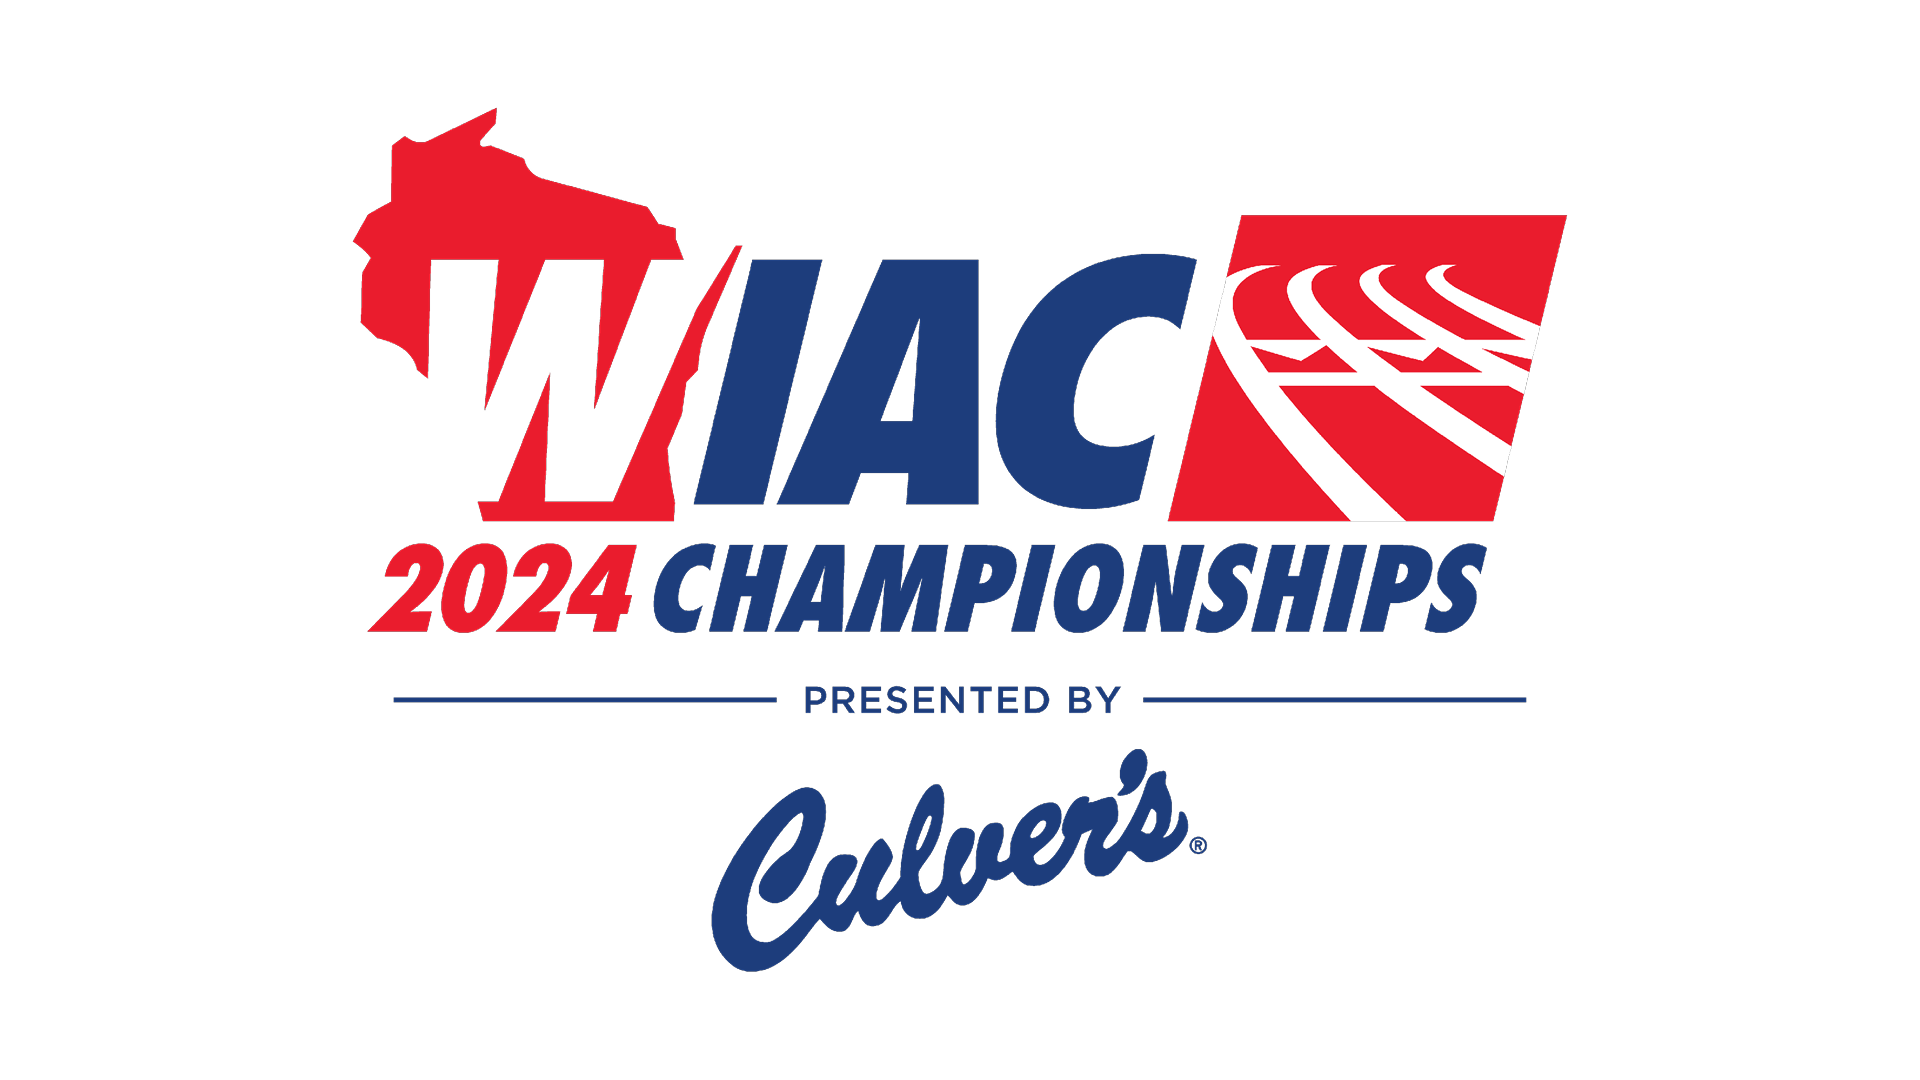 Rivers Resets Long Jump Record At WIAC Championship